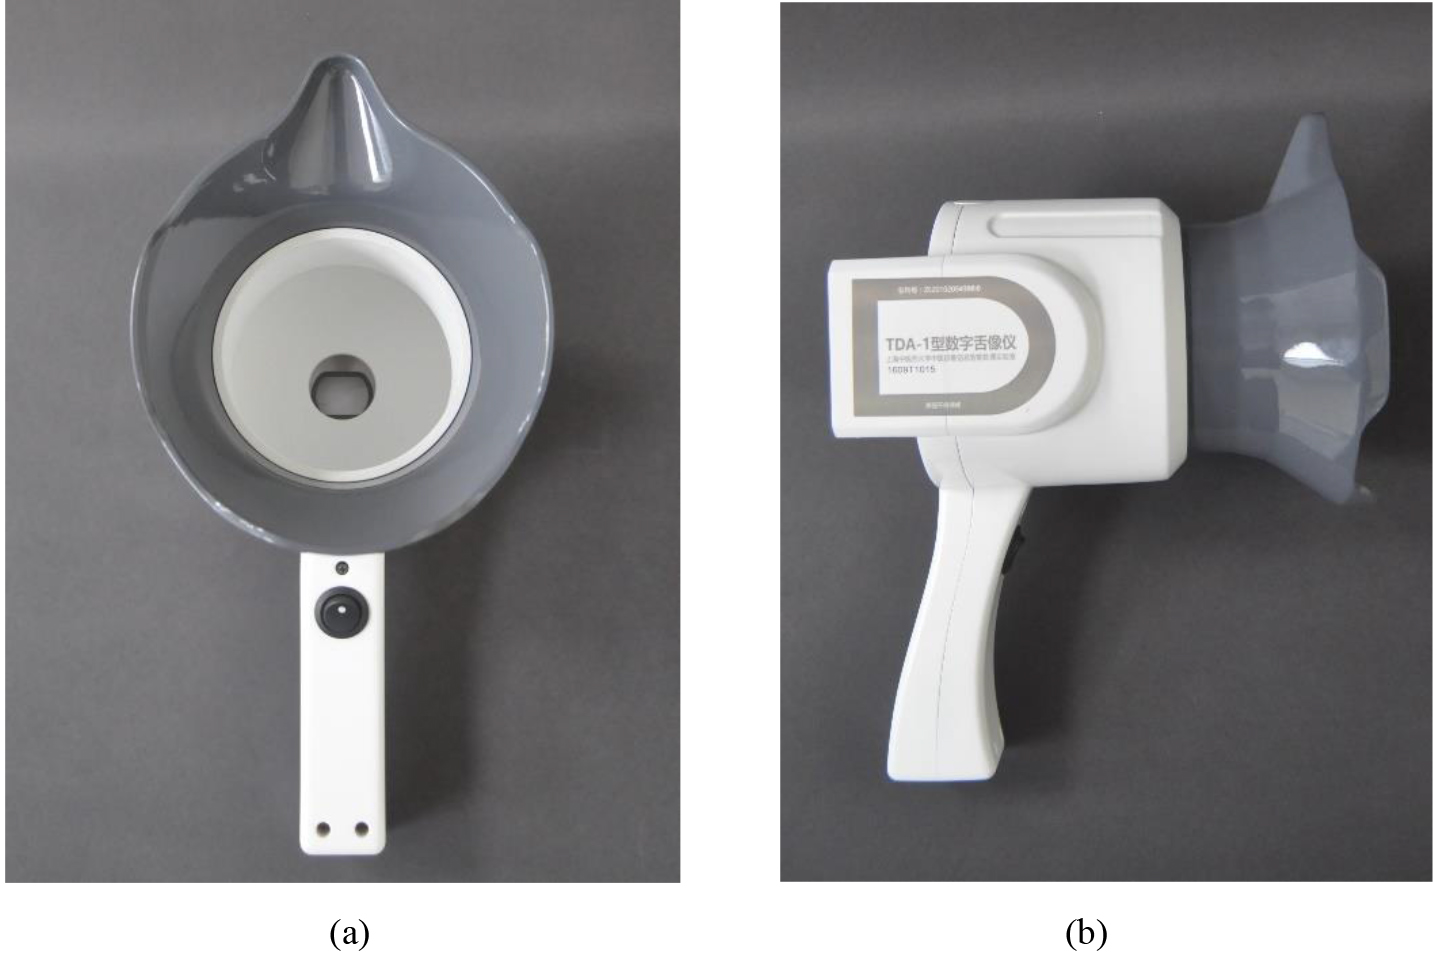 TDA-1 digital tongue diagnosis instrument: (a) front view; (b) profile view.